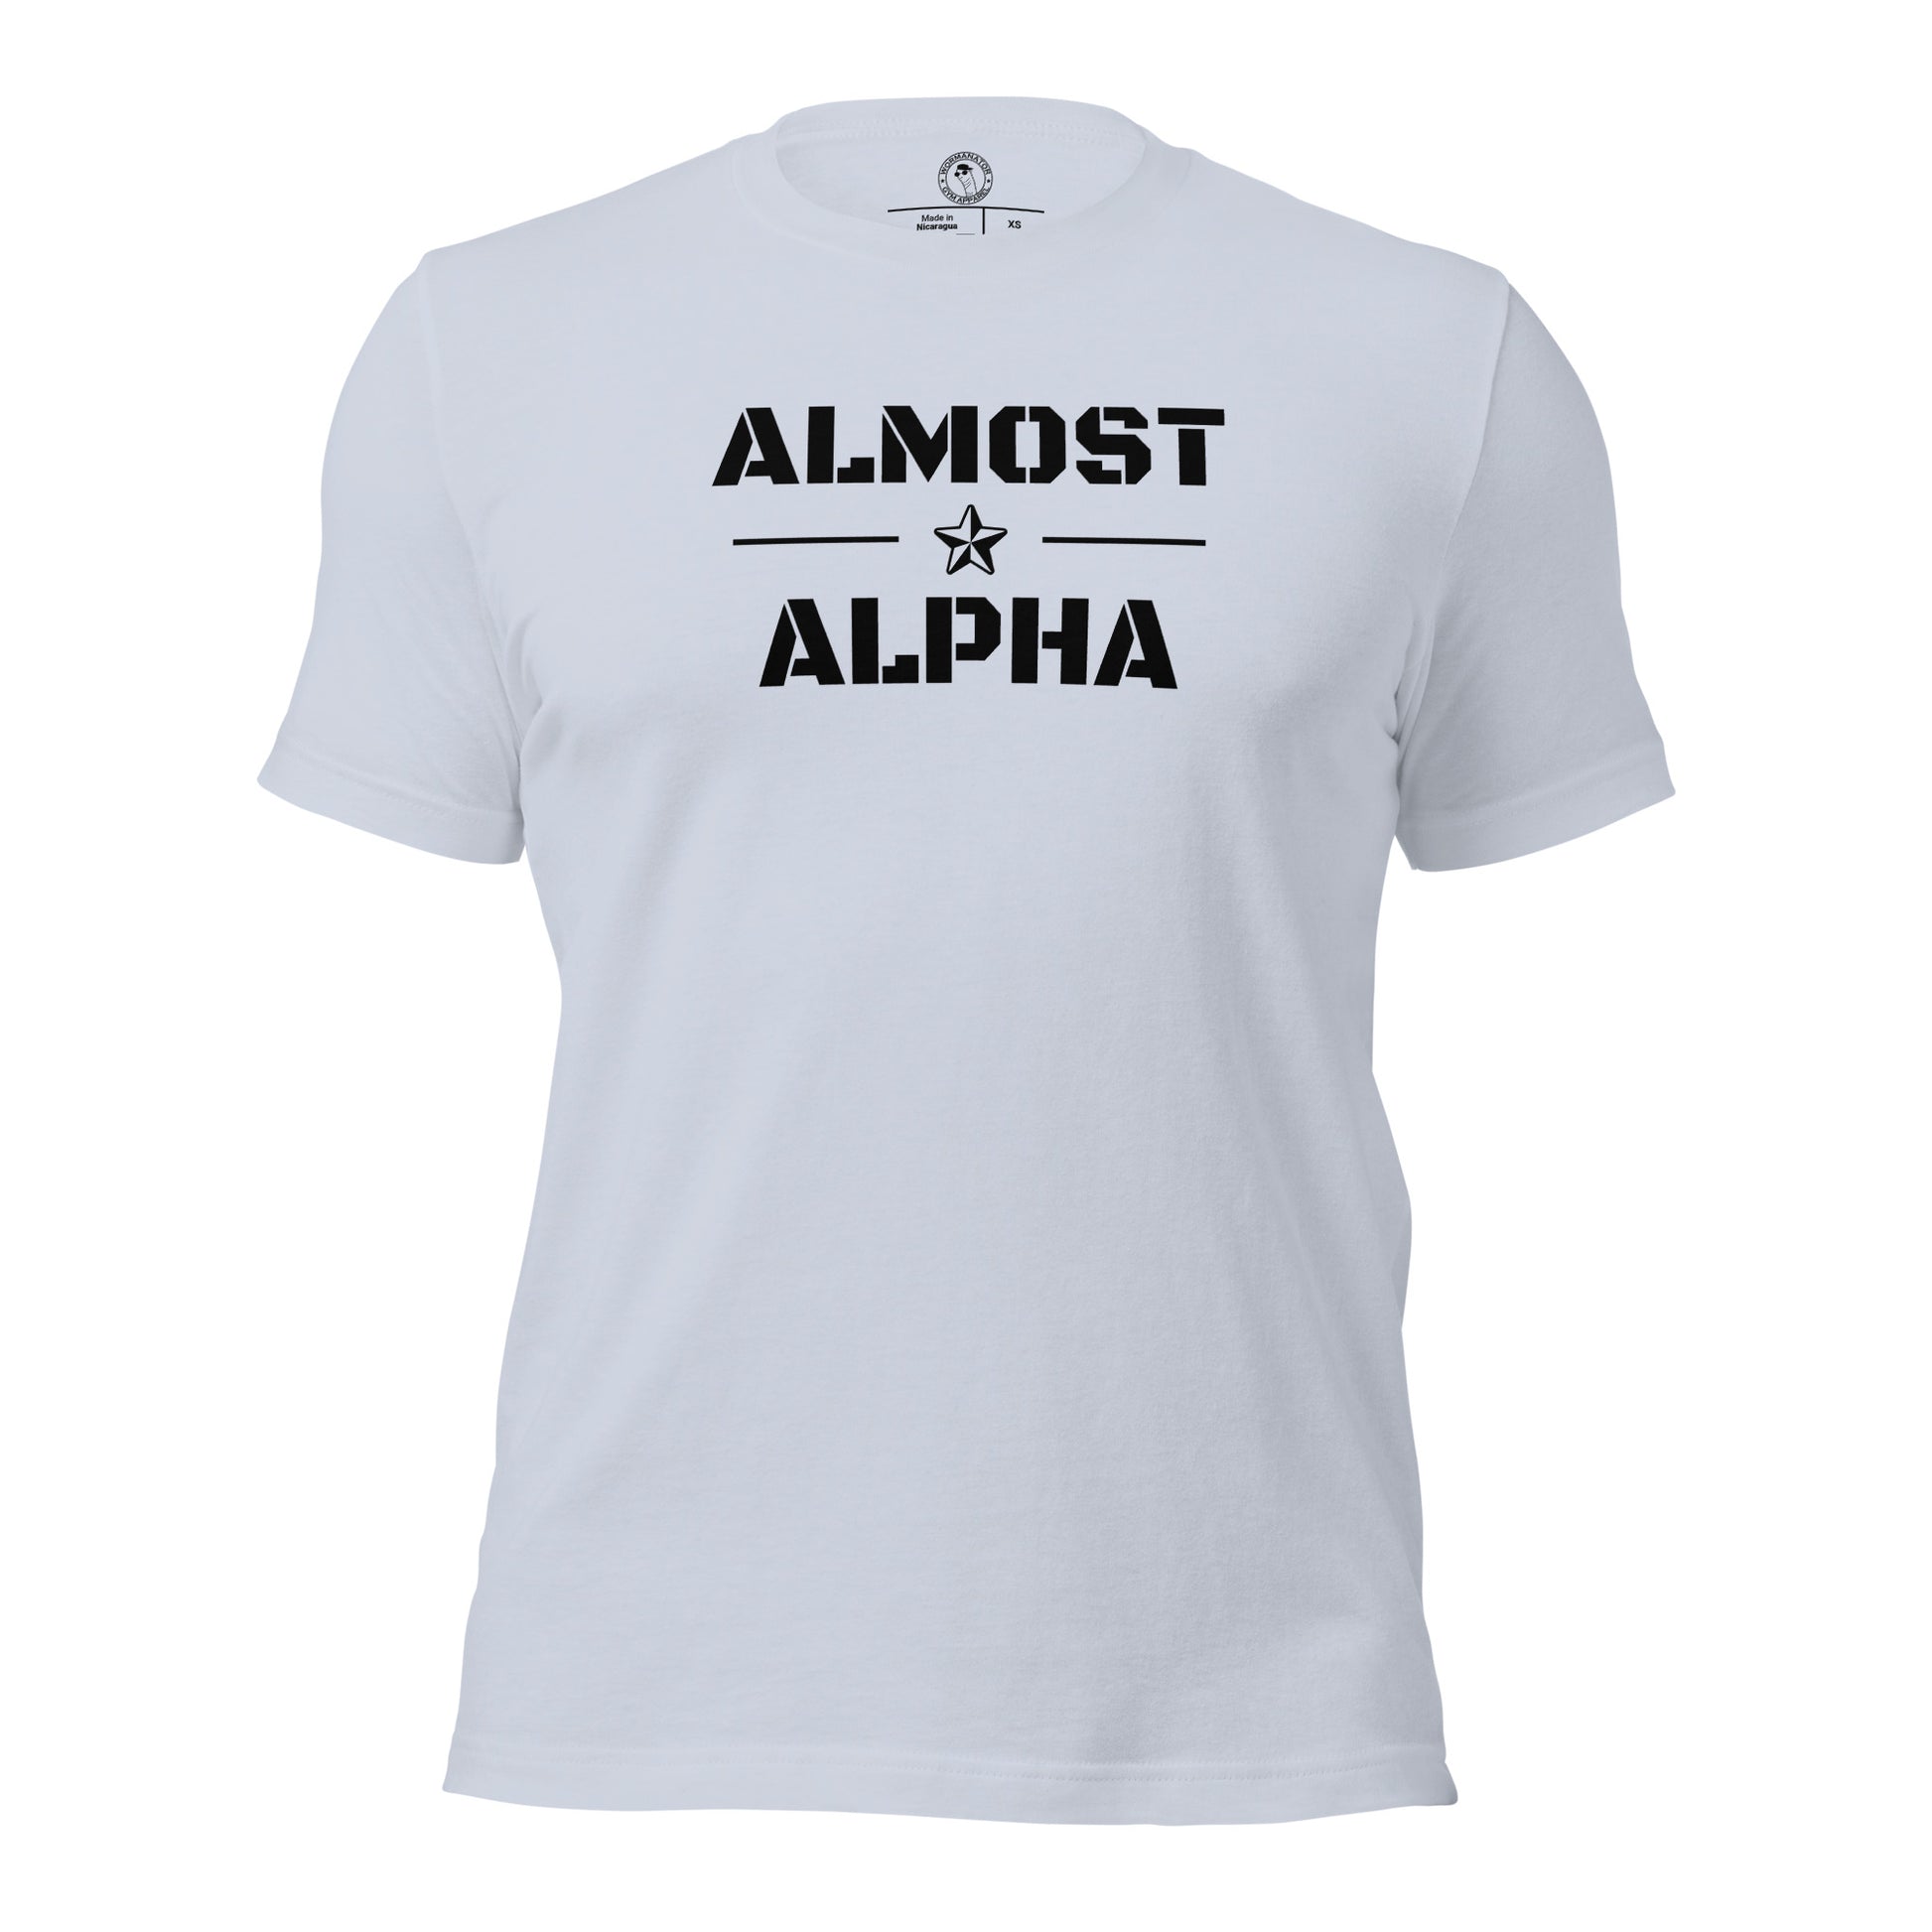 Almost Alpha Shirt in Light Blue